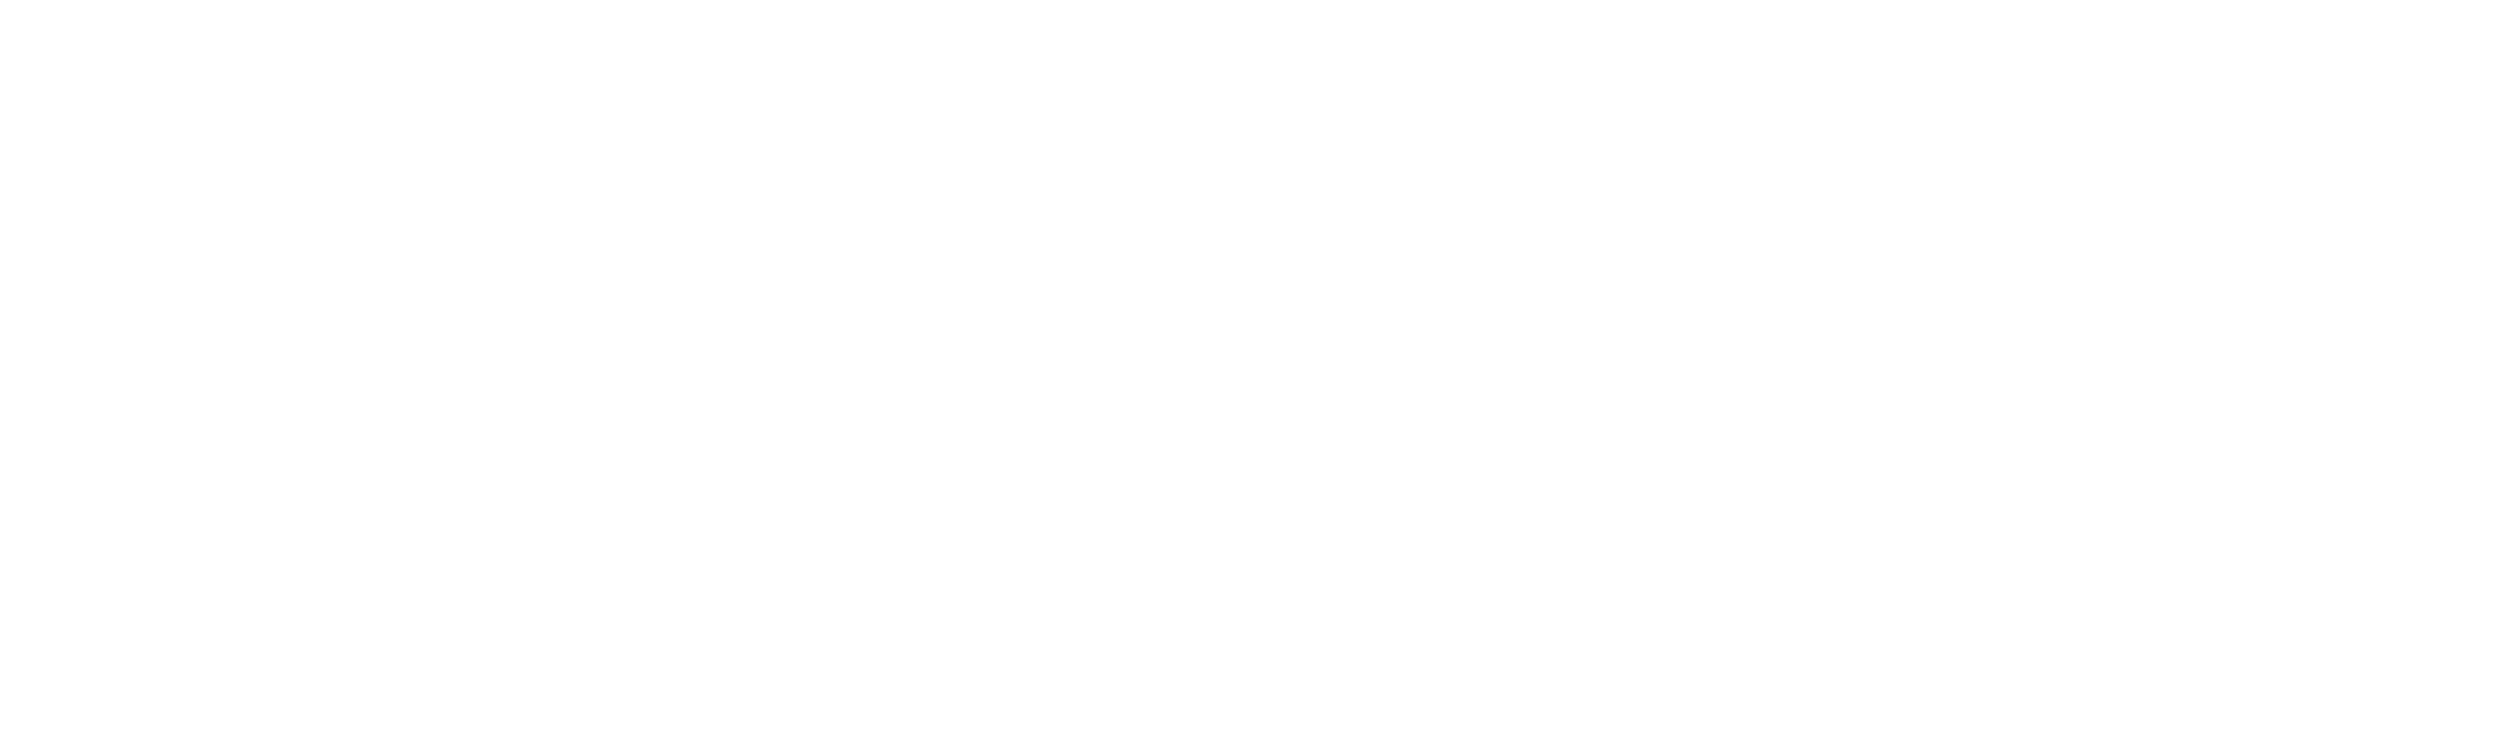 The Eric Fund